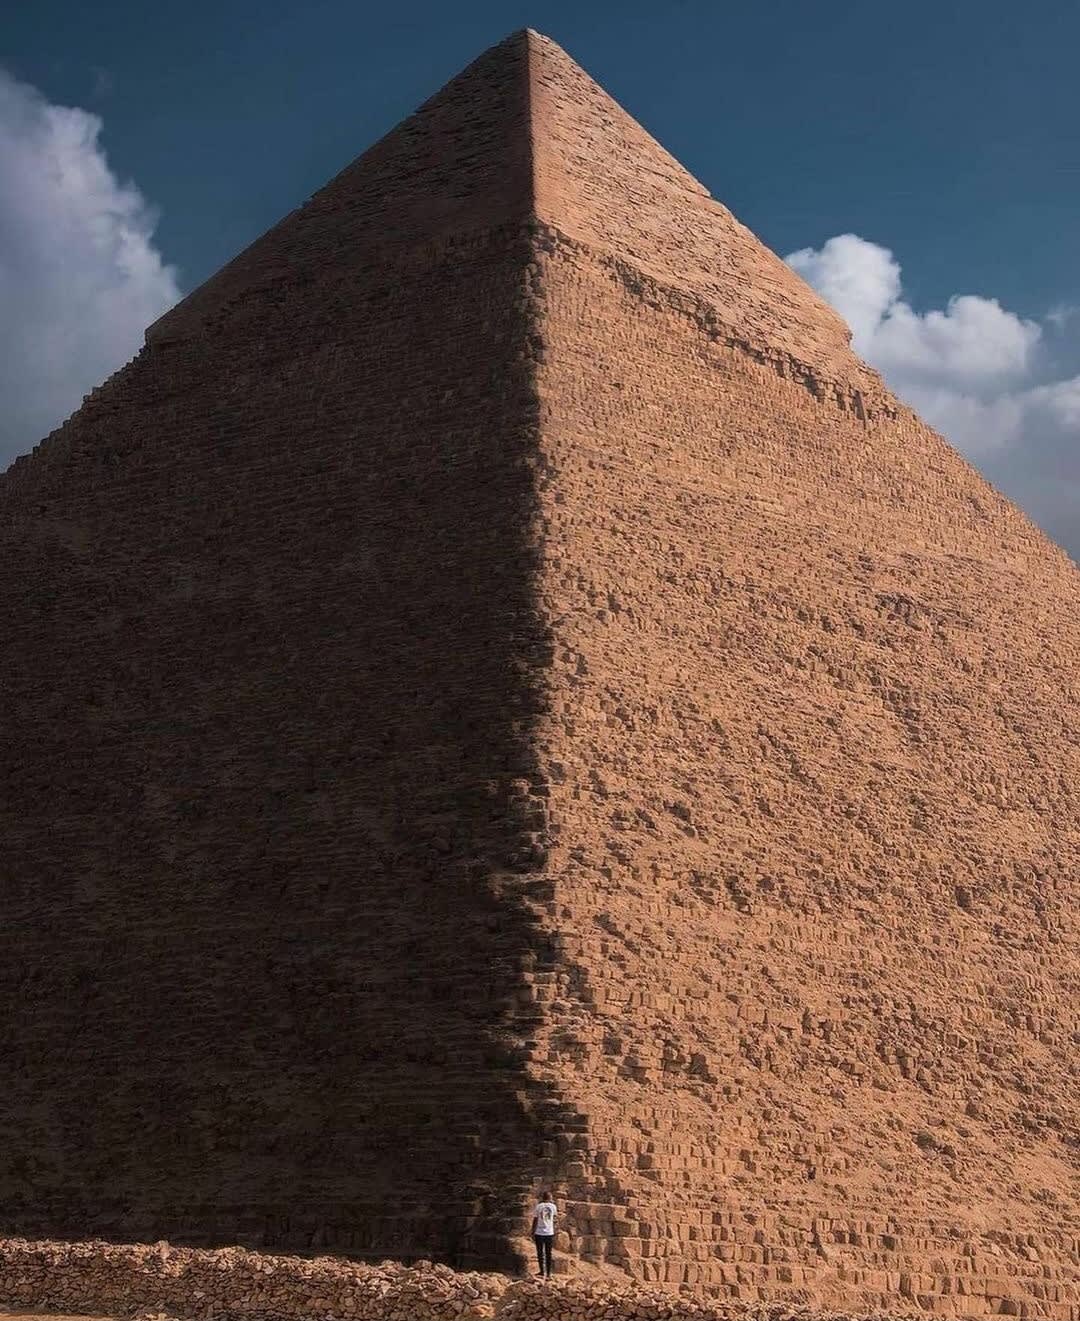 One of the pyramids at Giza